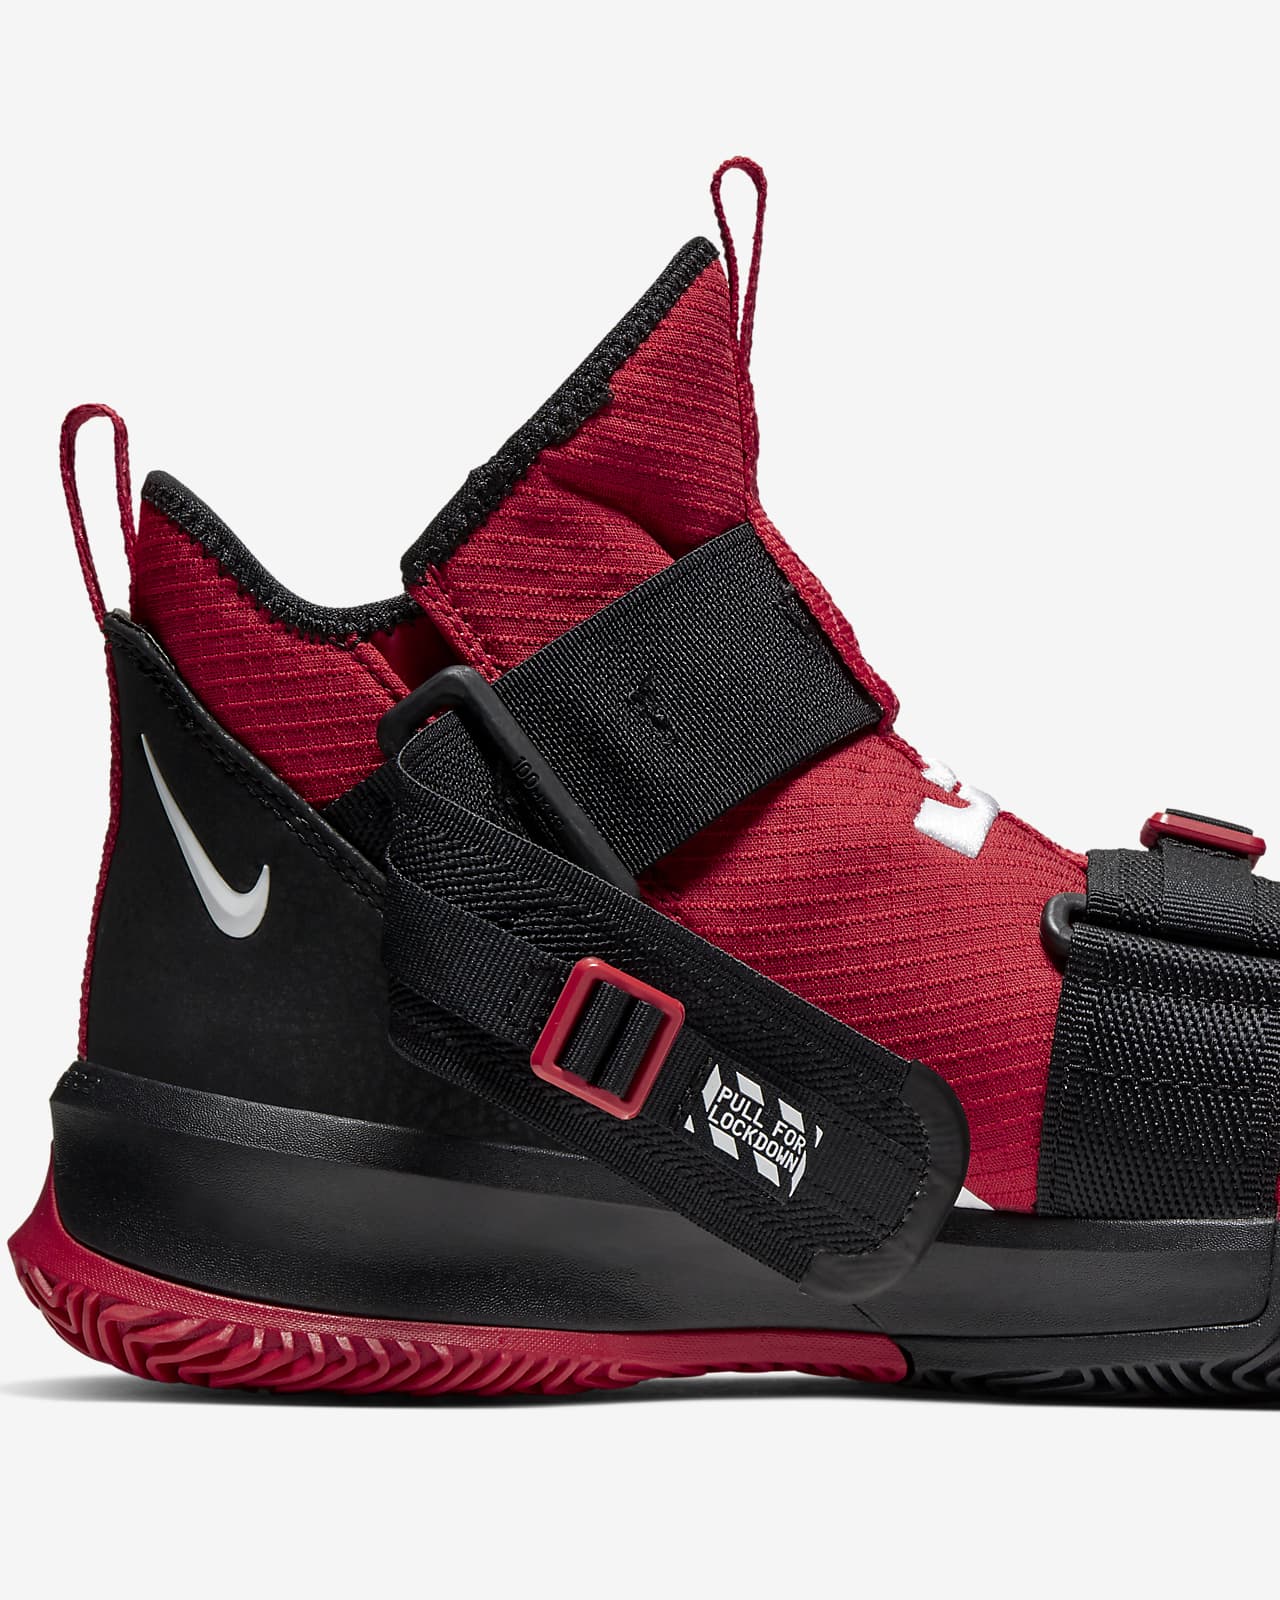 Scarpa da basket LeBron Soldier 13 SFG. Nike CH